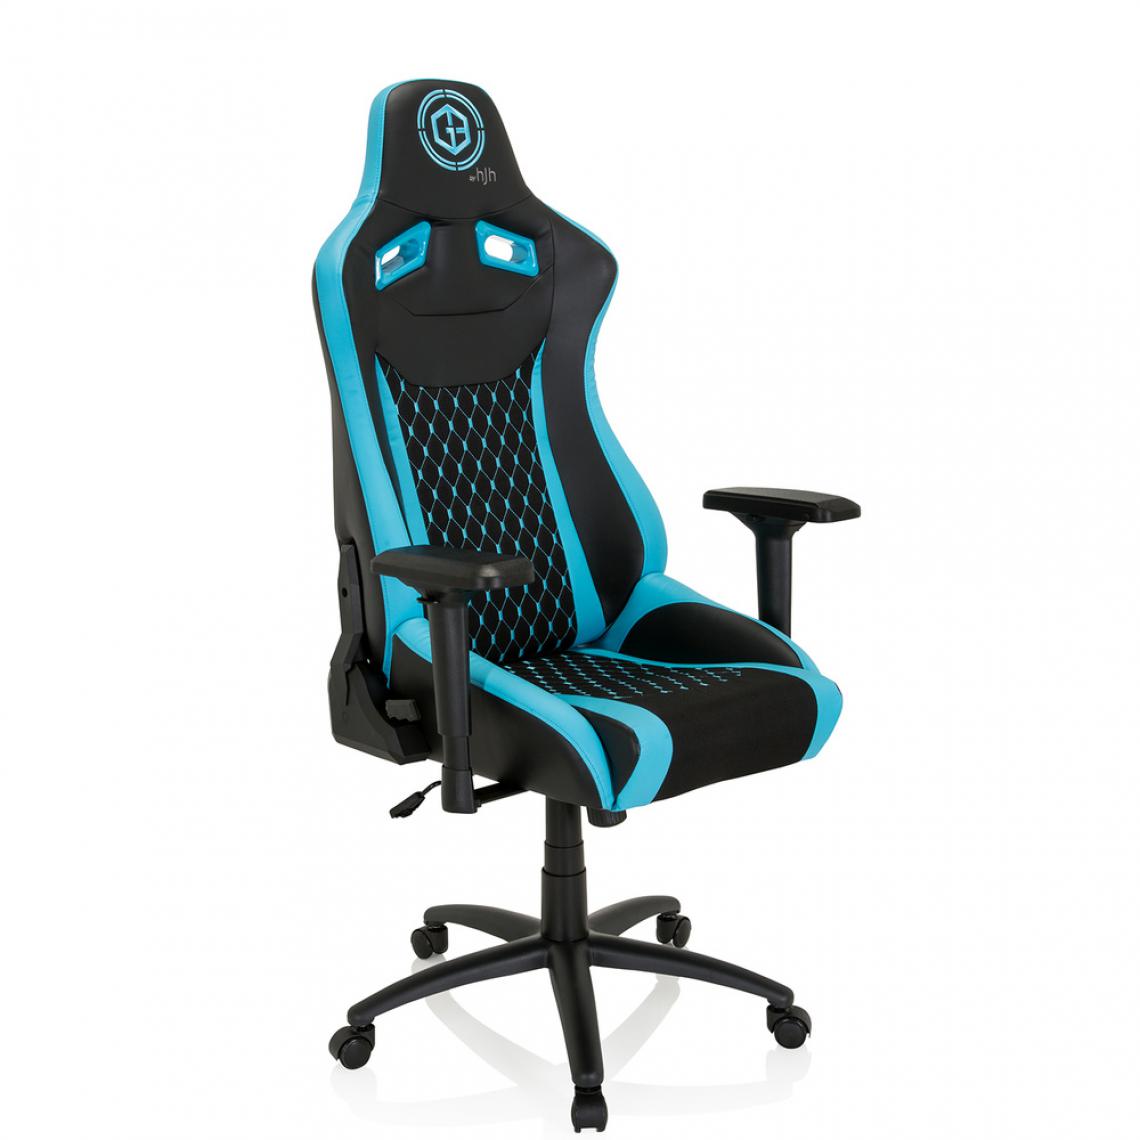 Hjh Office - Chaise de Gaming / Chaise de bureau GAMEBREAKER SX 04 Tissu / Similicuir noir / turquoise hjh OFFICE - Chaise gamer